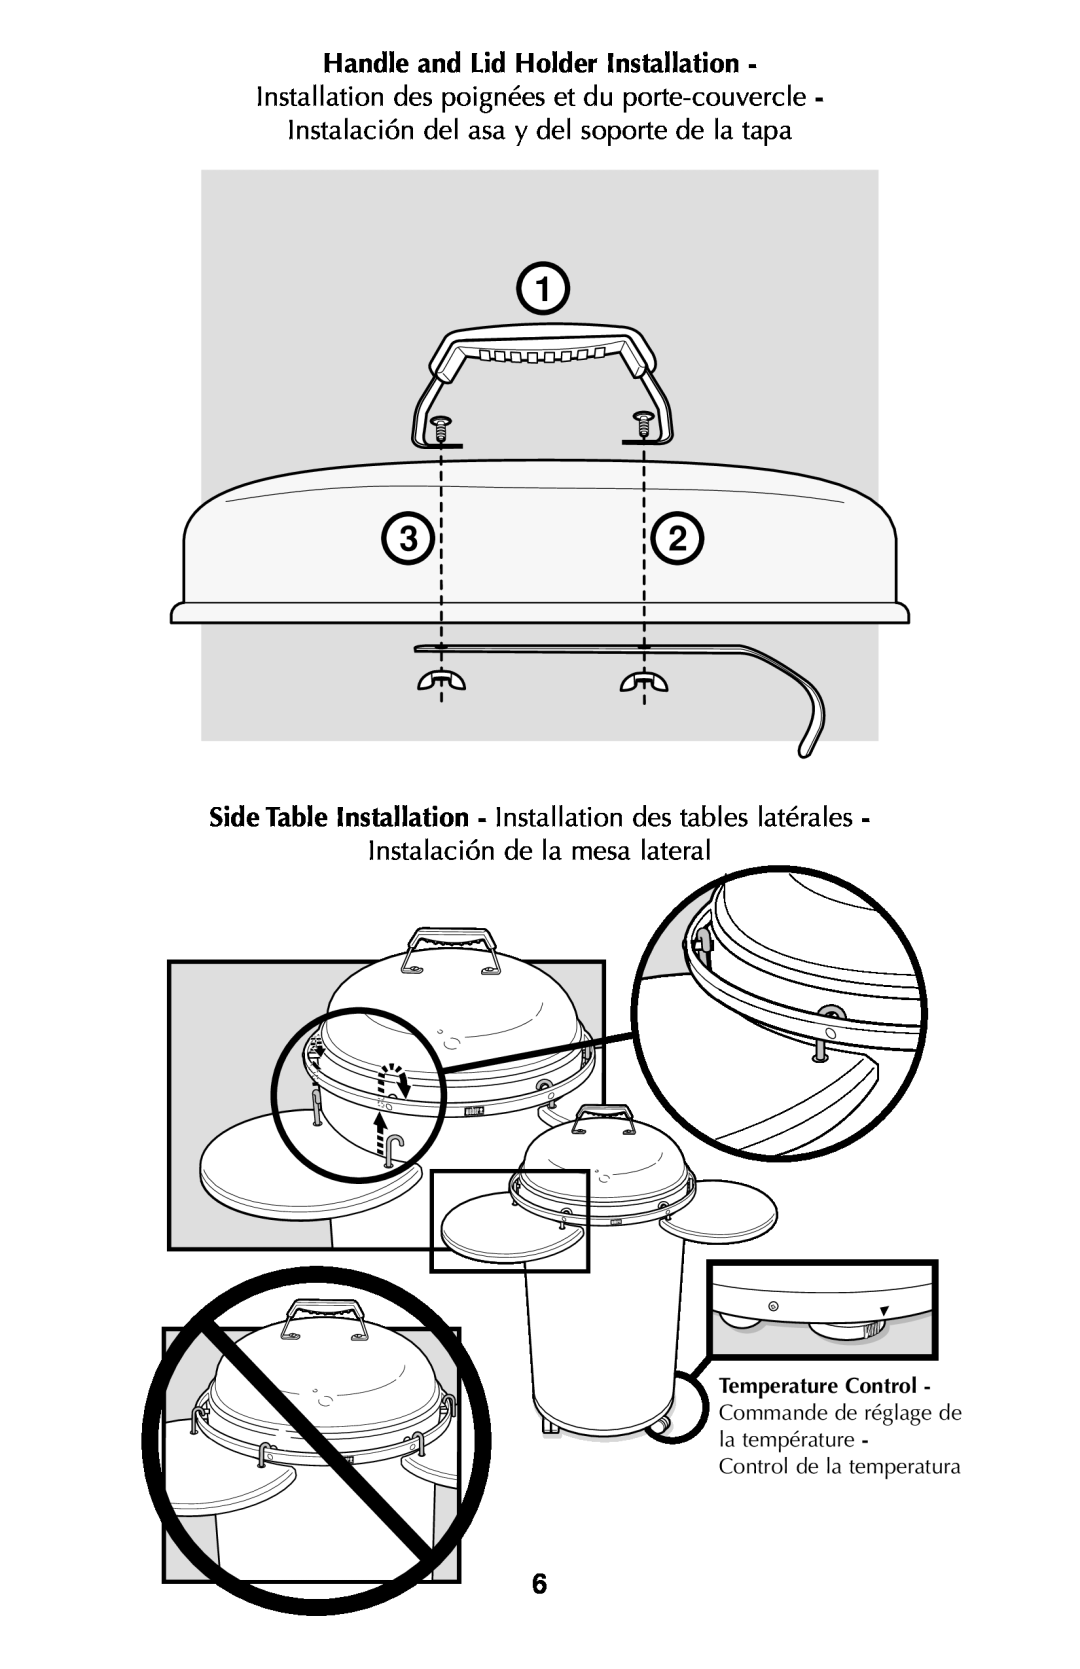 Weber Refrigerator manual Handle and Lid Holder Installation, Installation des poignées et du porte-couvercle 